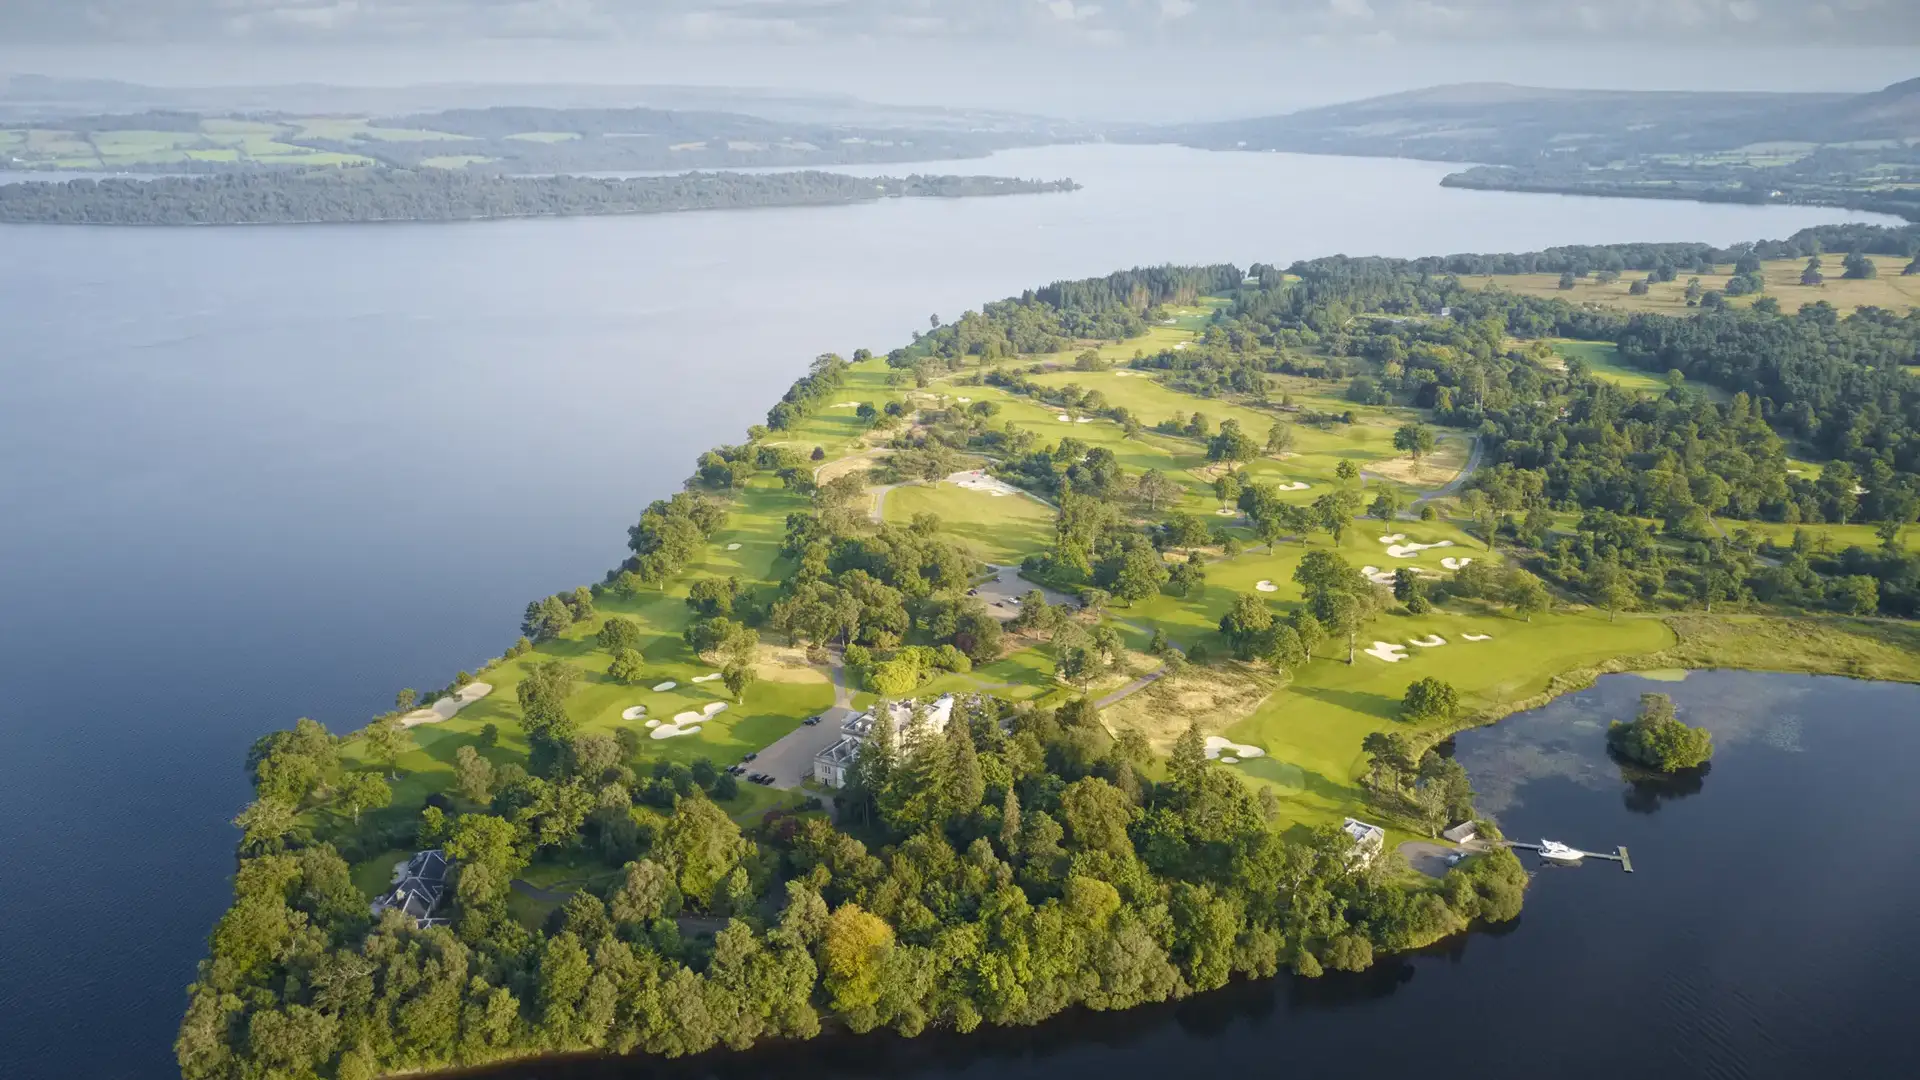 Scottish Golf Courses